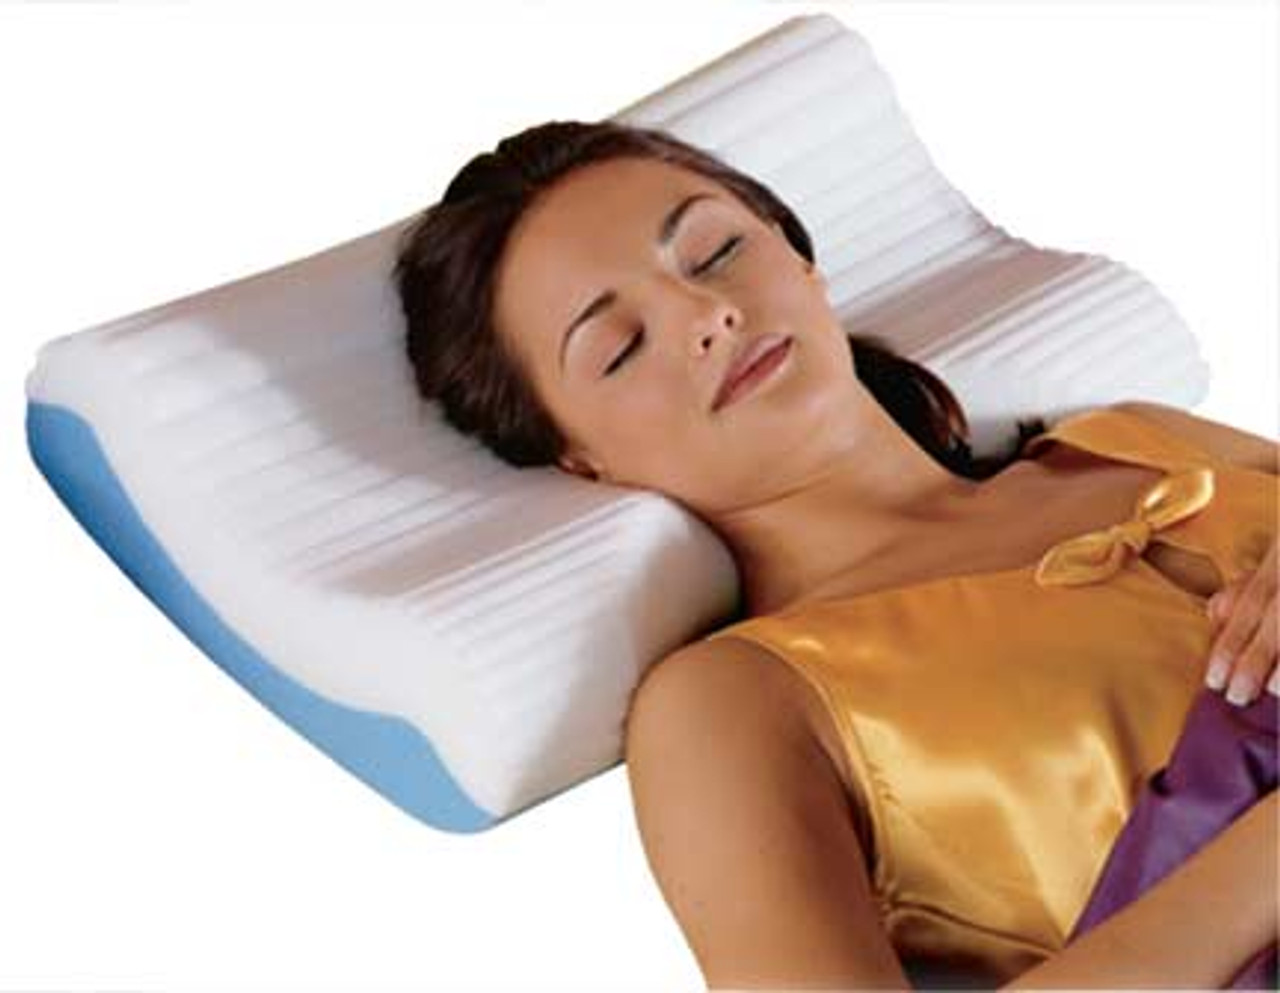 sleepcloud cervical orthopedic pillow